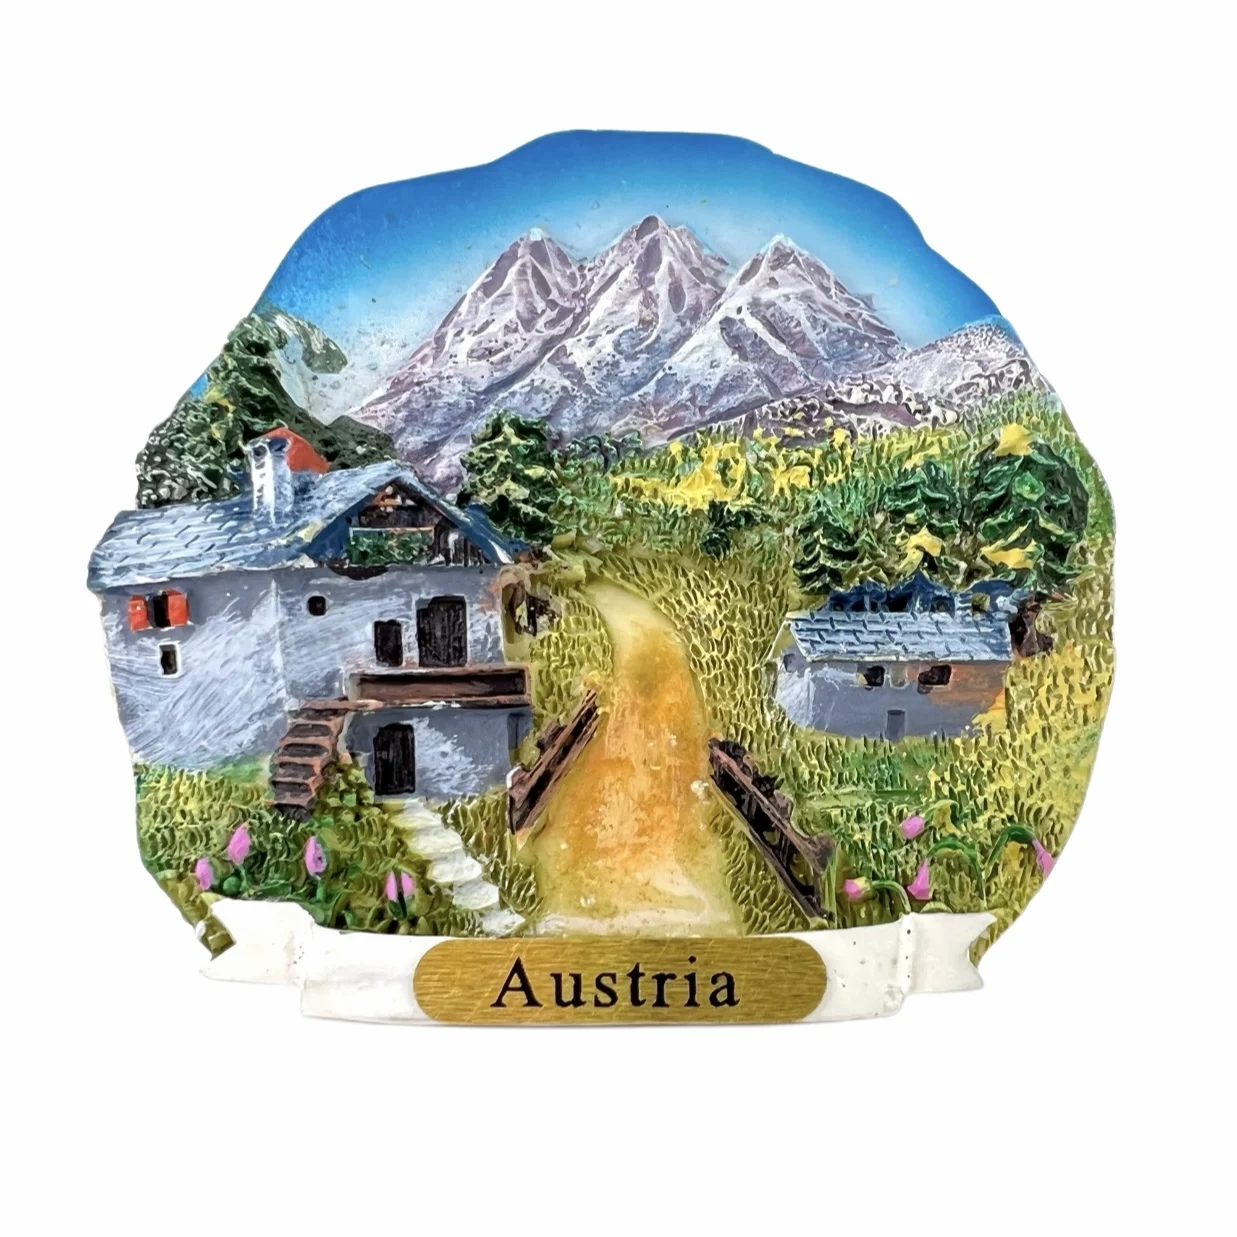 

Austria Fridge Magnets Travel 3D Memorial Magnetic Refrigerator Stickers Gift Room Decoration Collectio